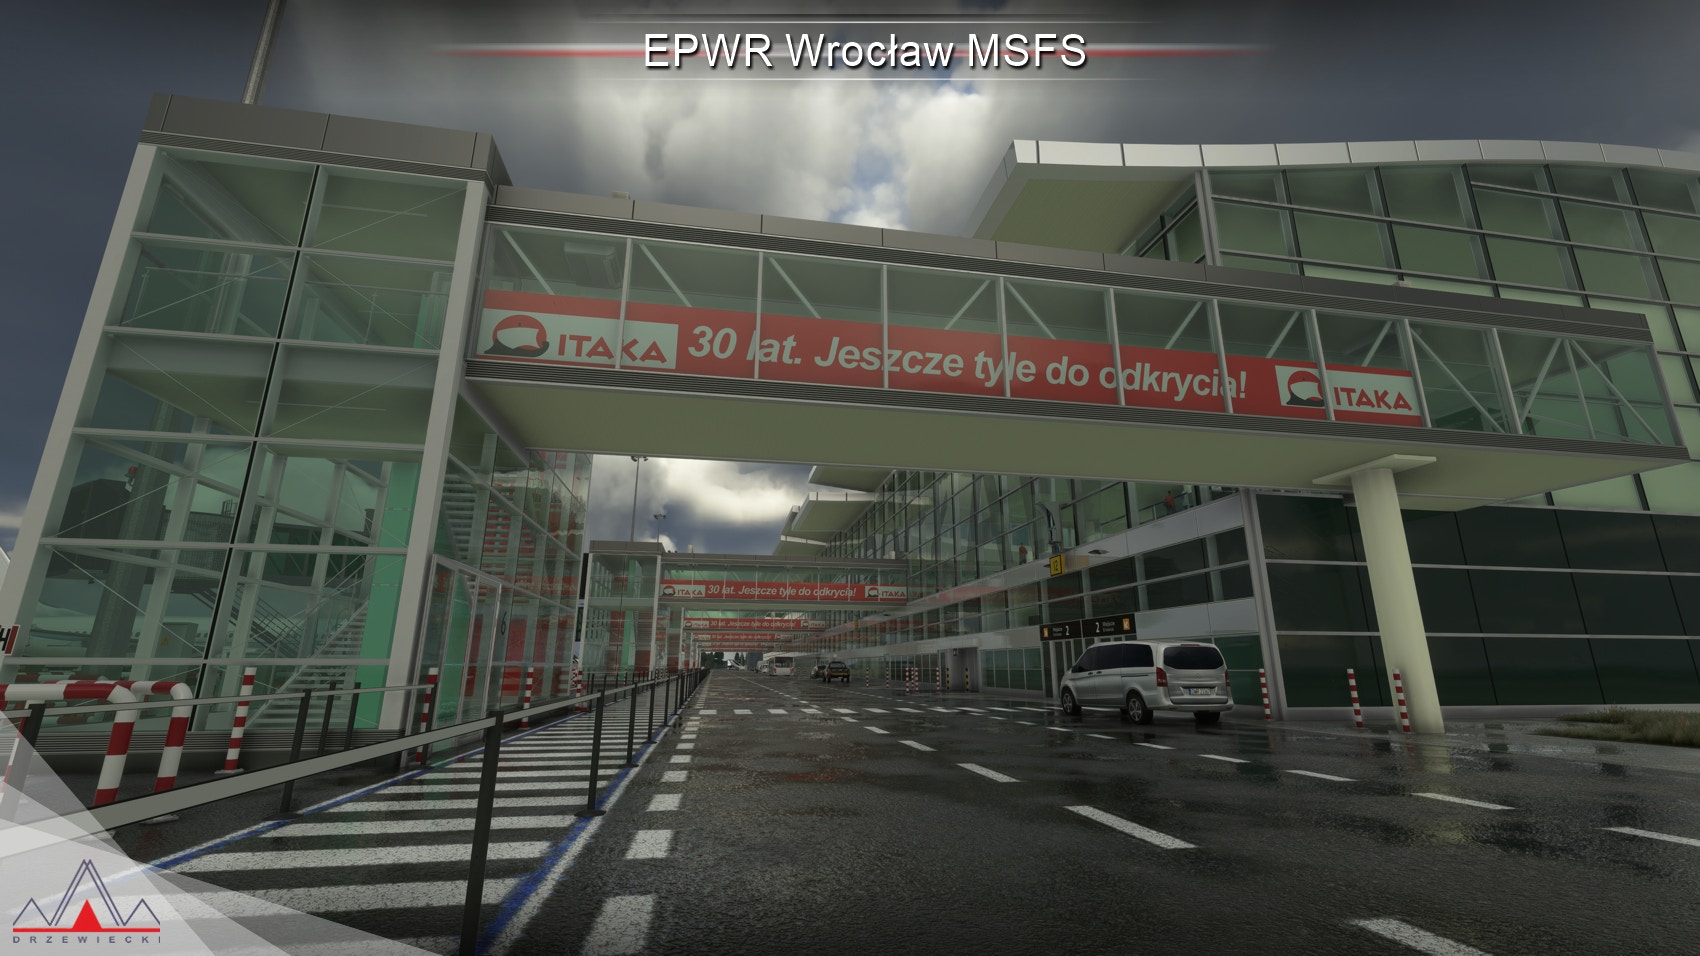 Drzewiecki Design Releases Wroclaw for MSFS